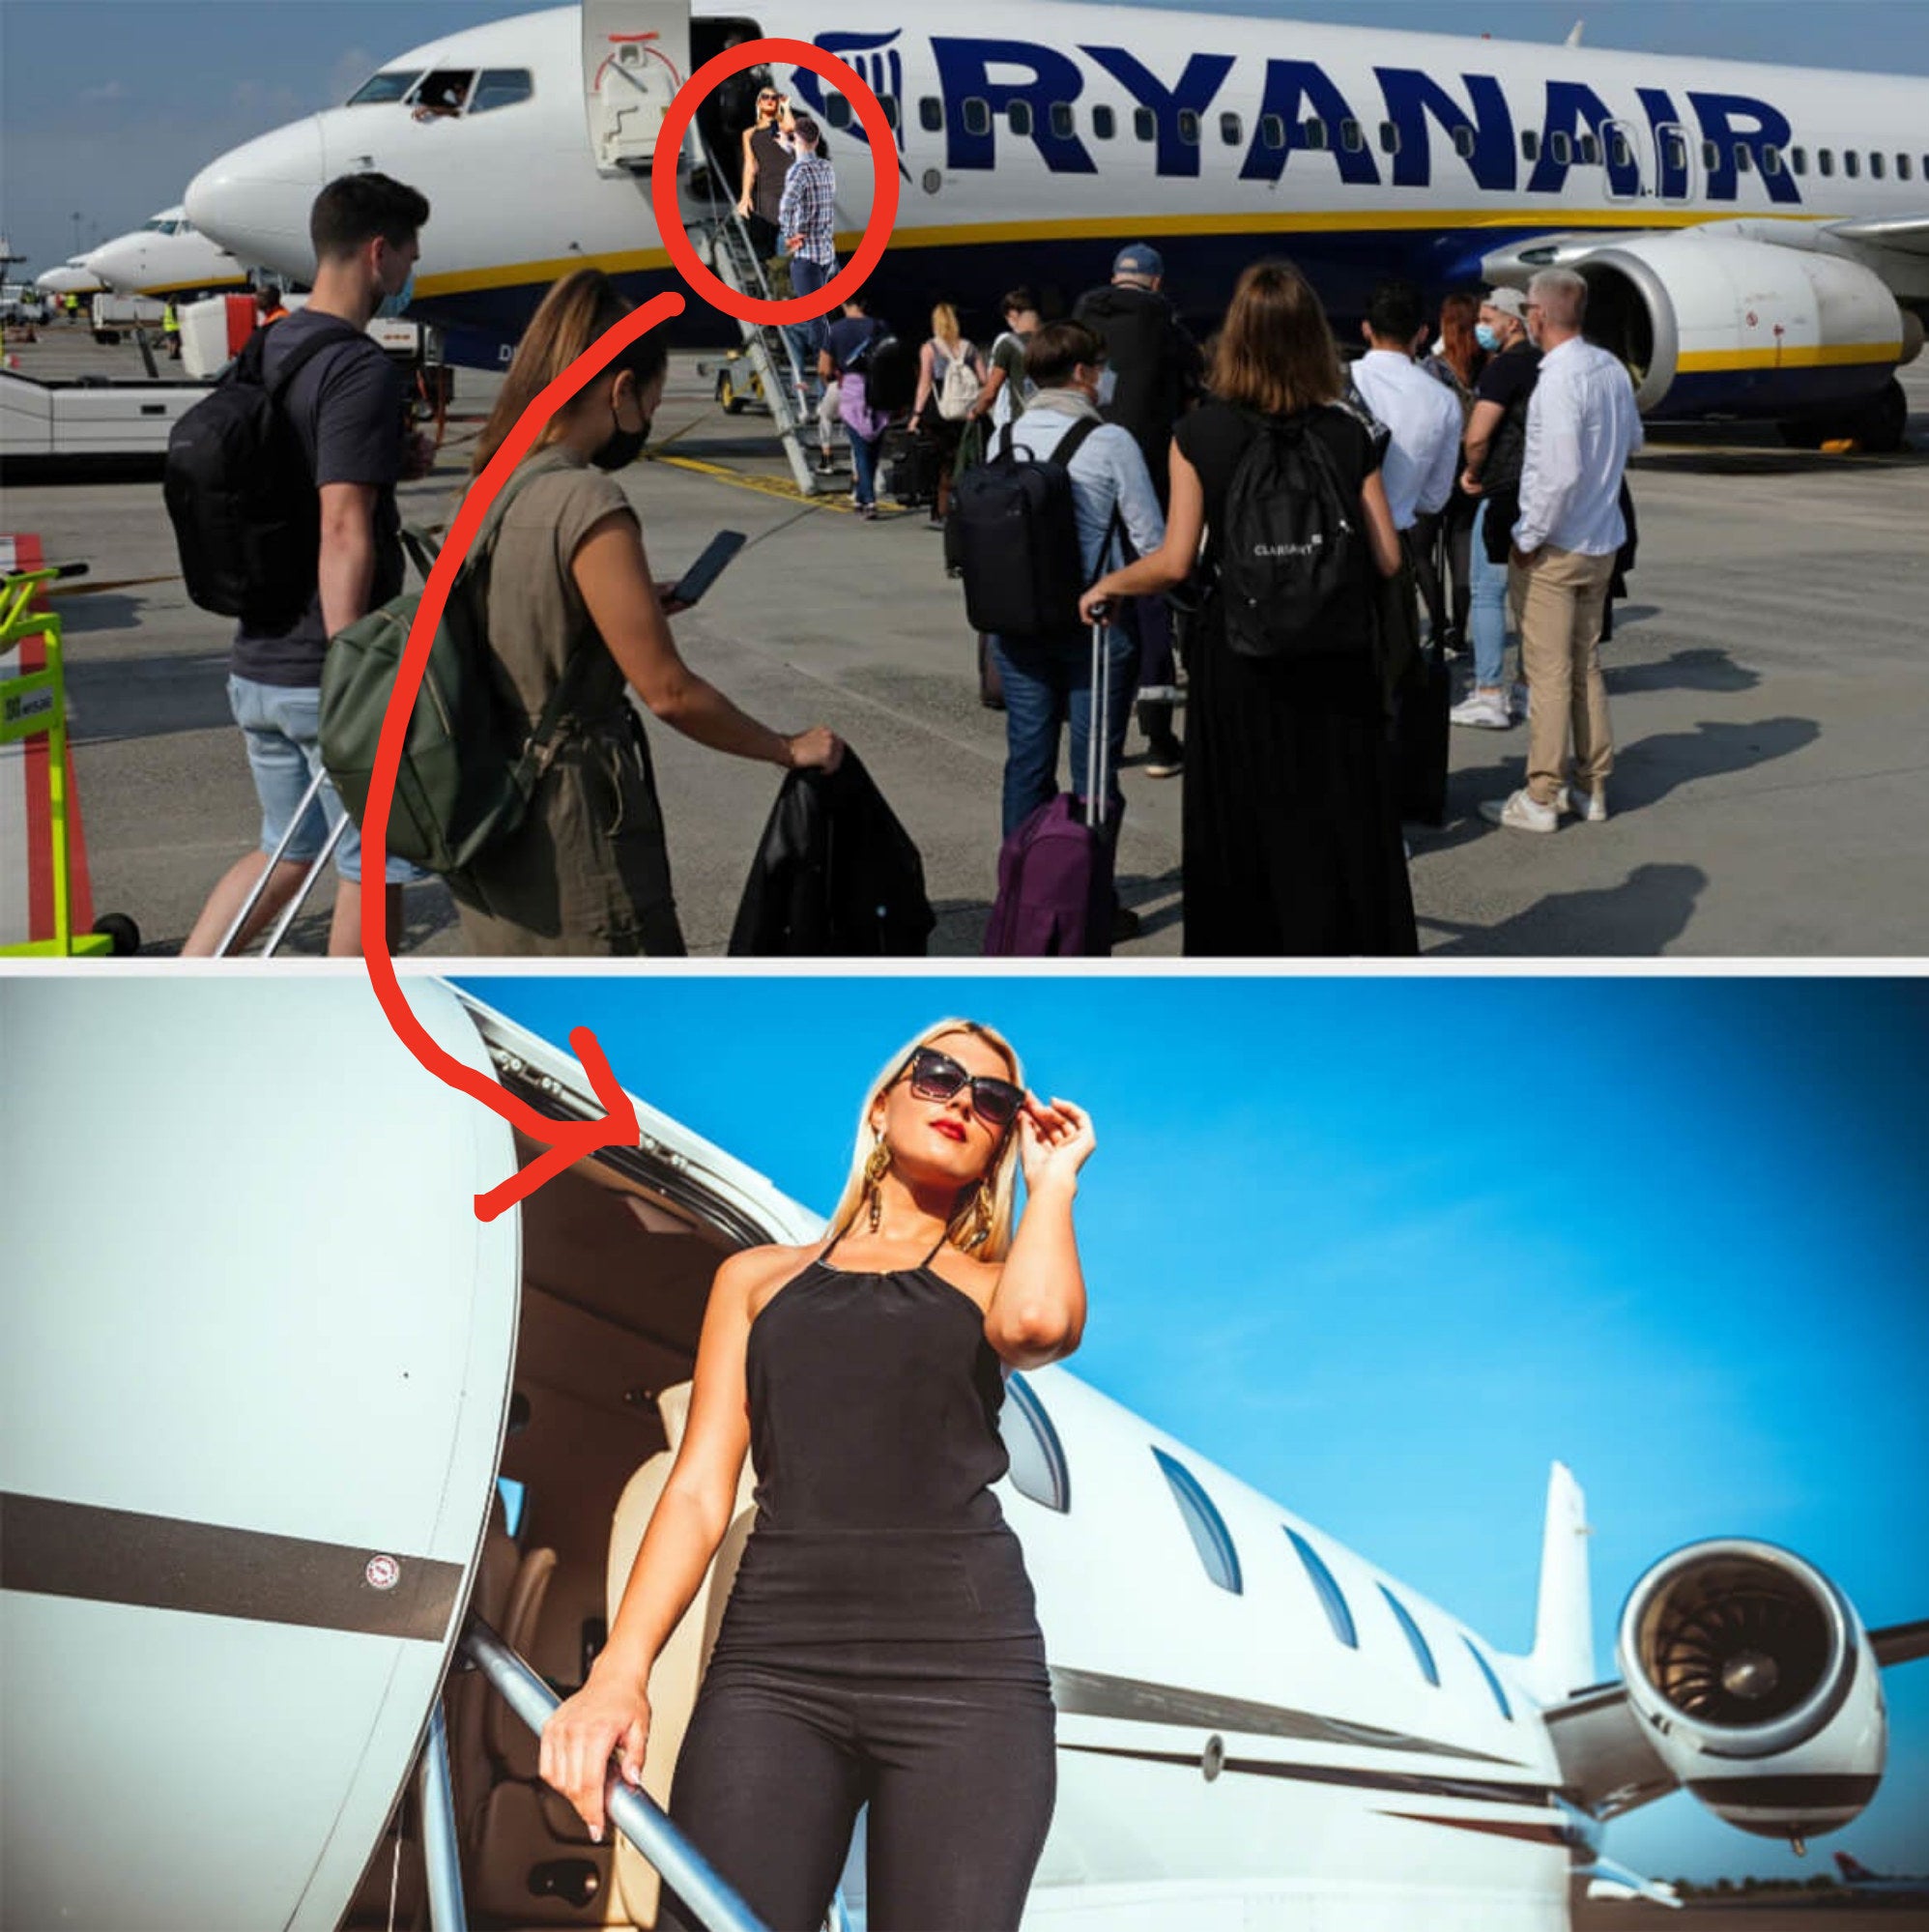 A woman taking photos on a plane